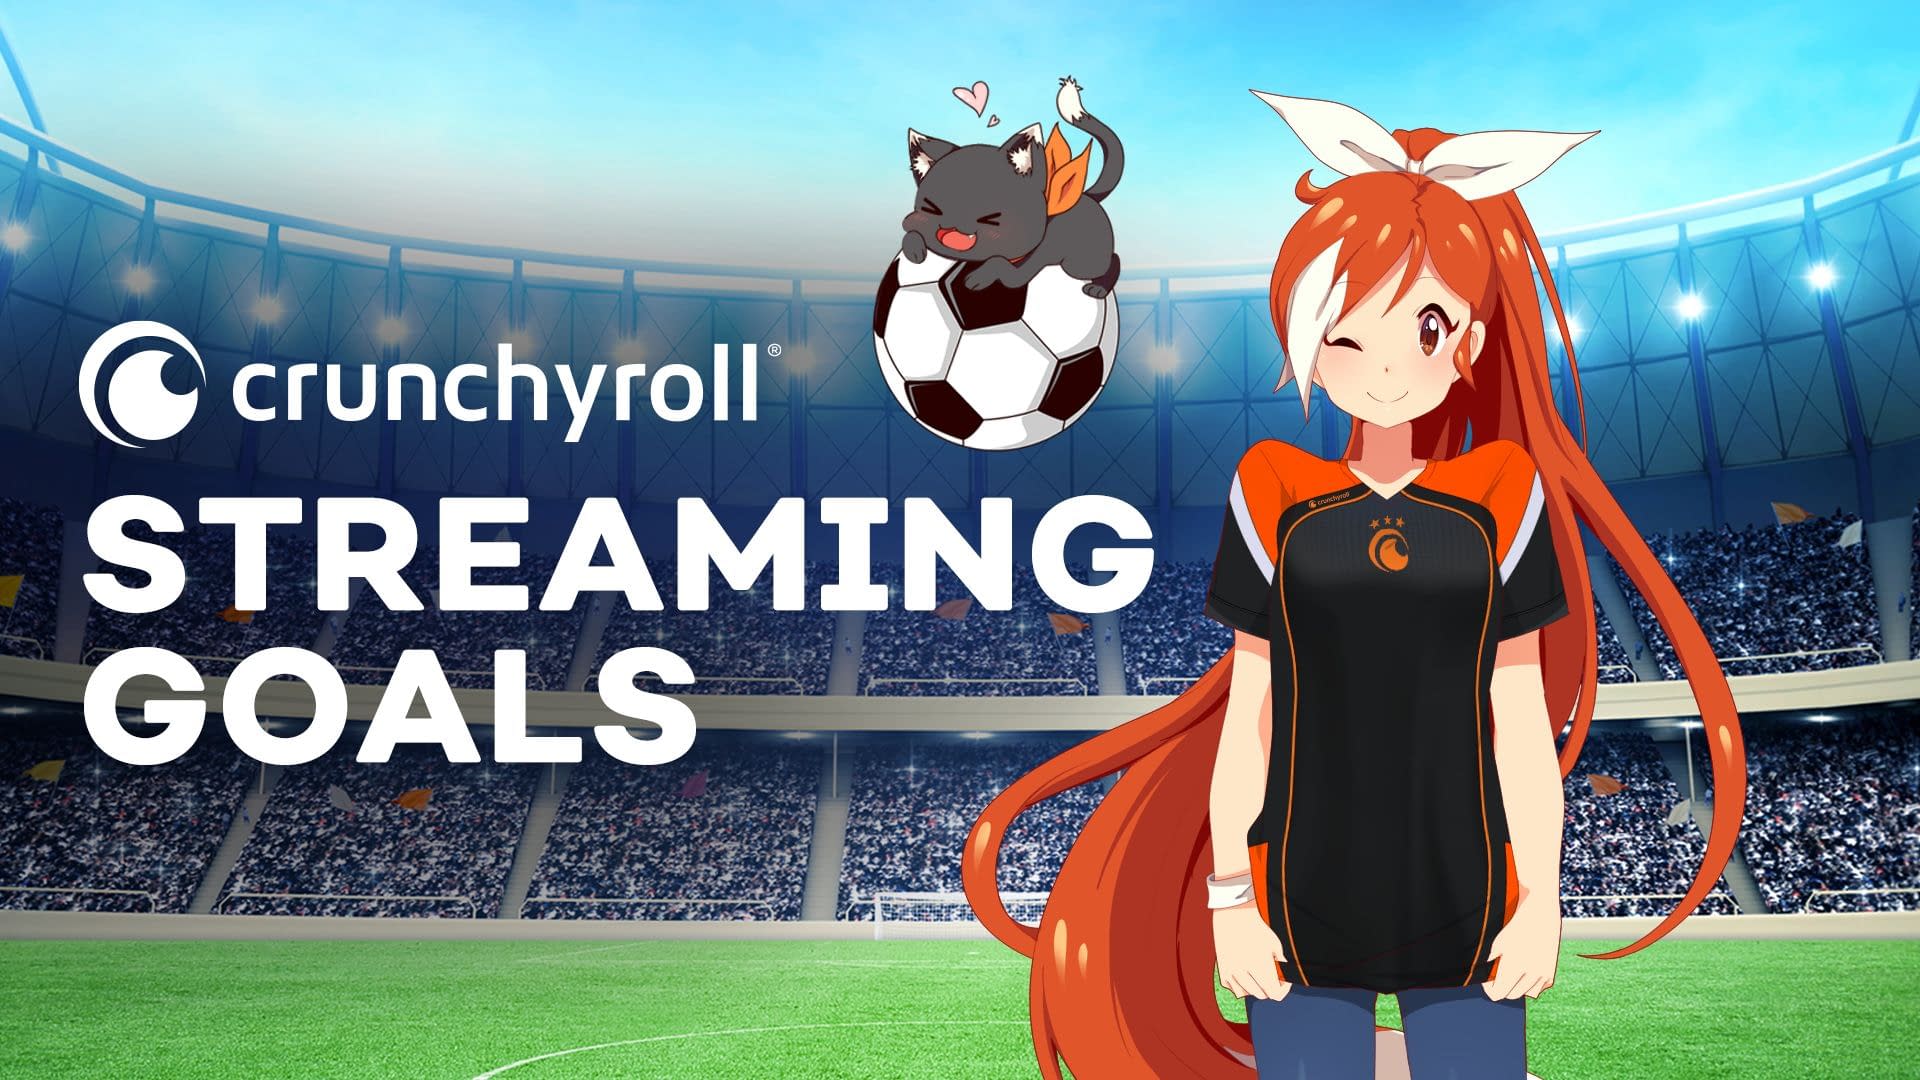 VIDEO: Latest Dog Days 2 Anime Trailer - Crunchyroll News